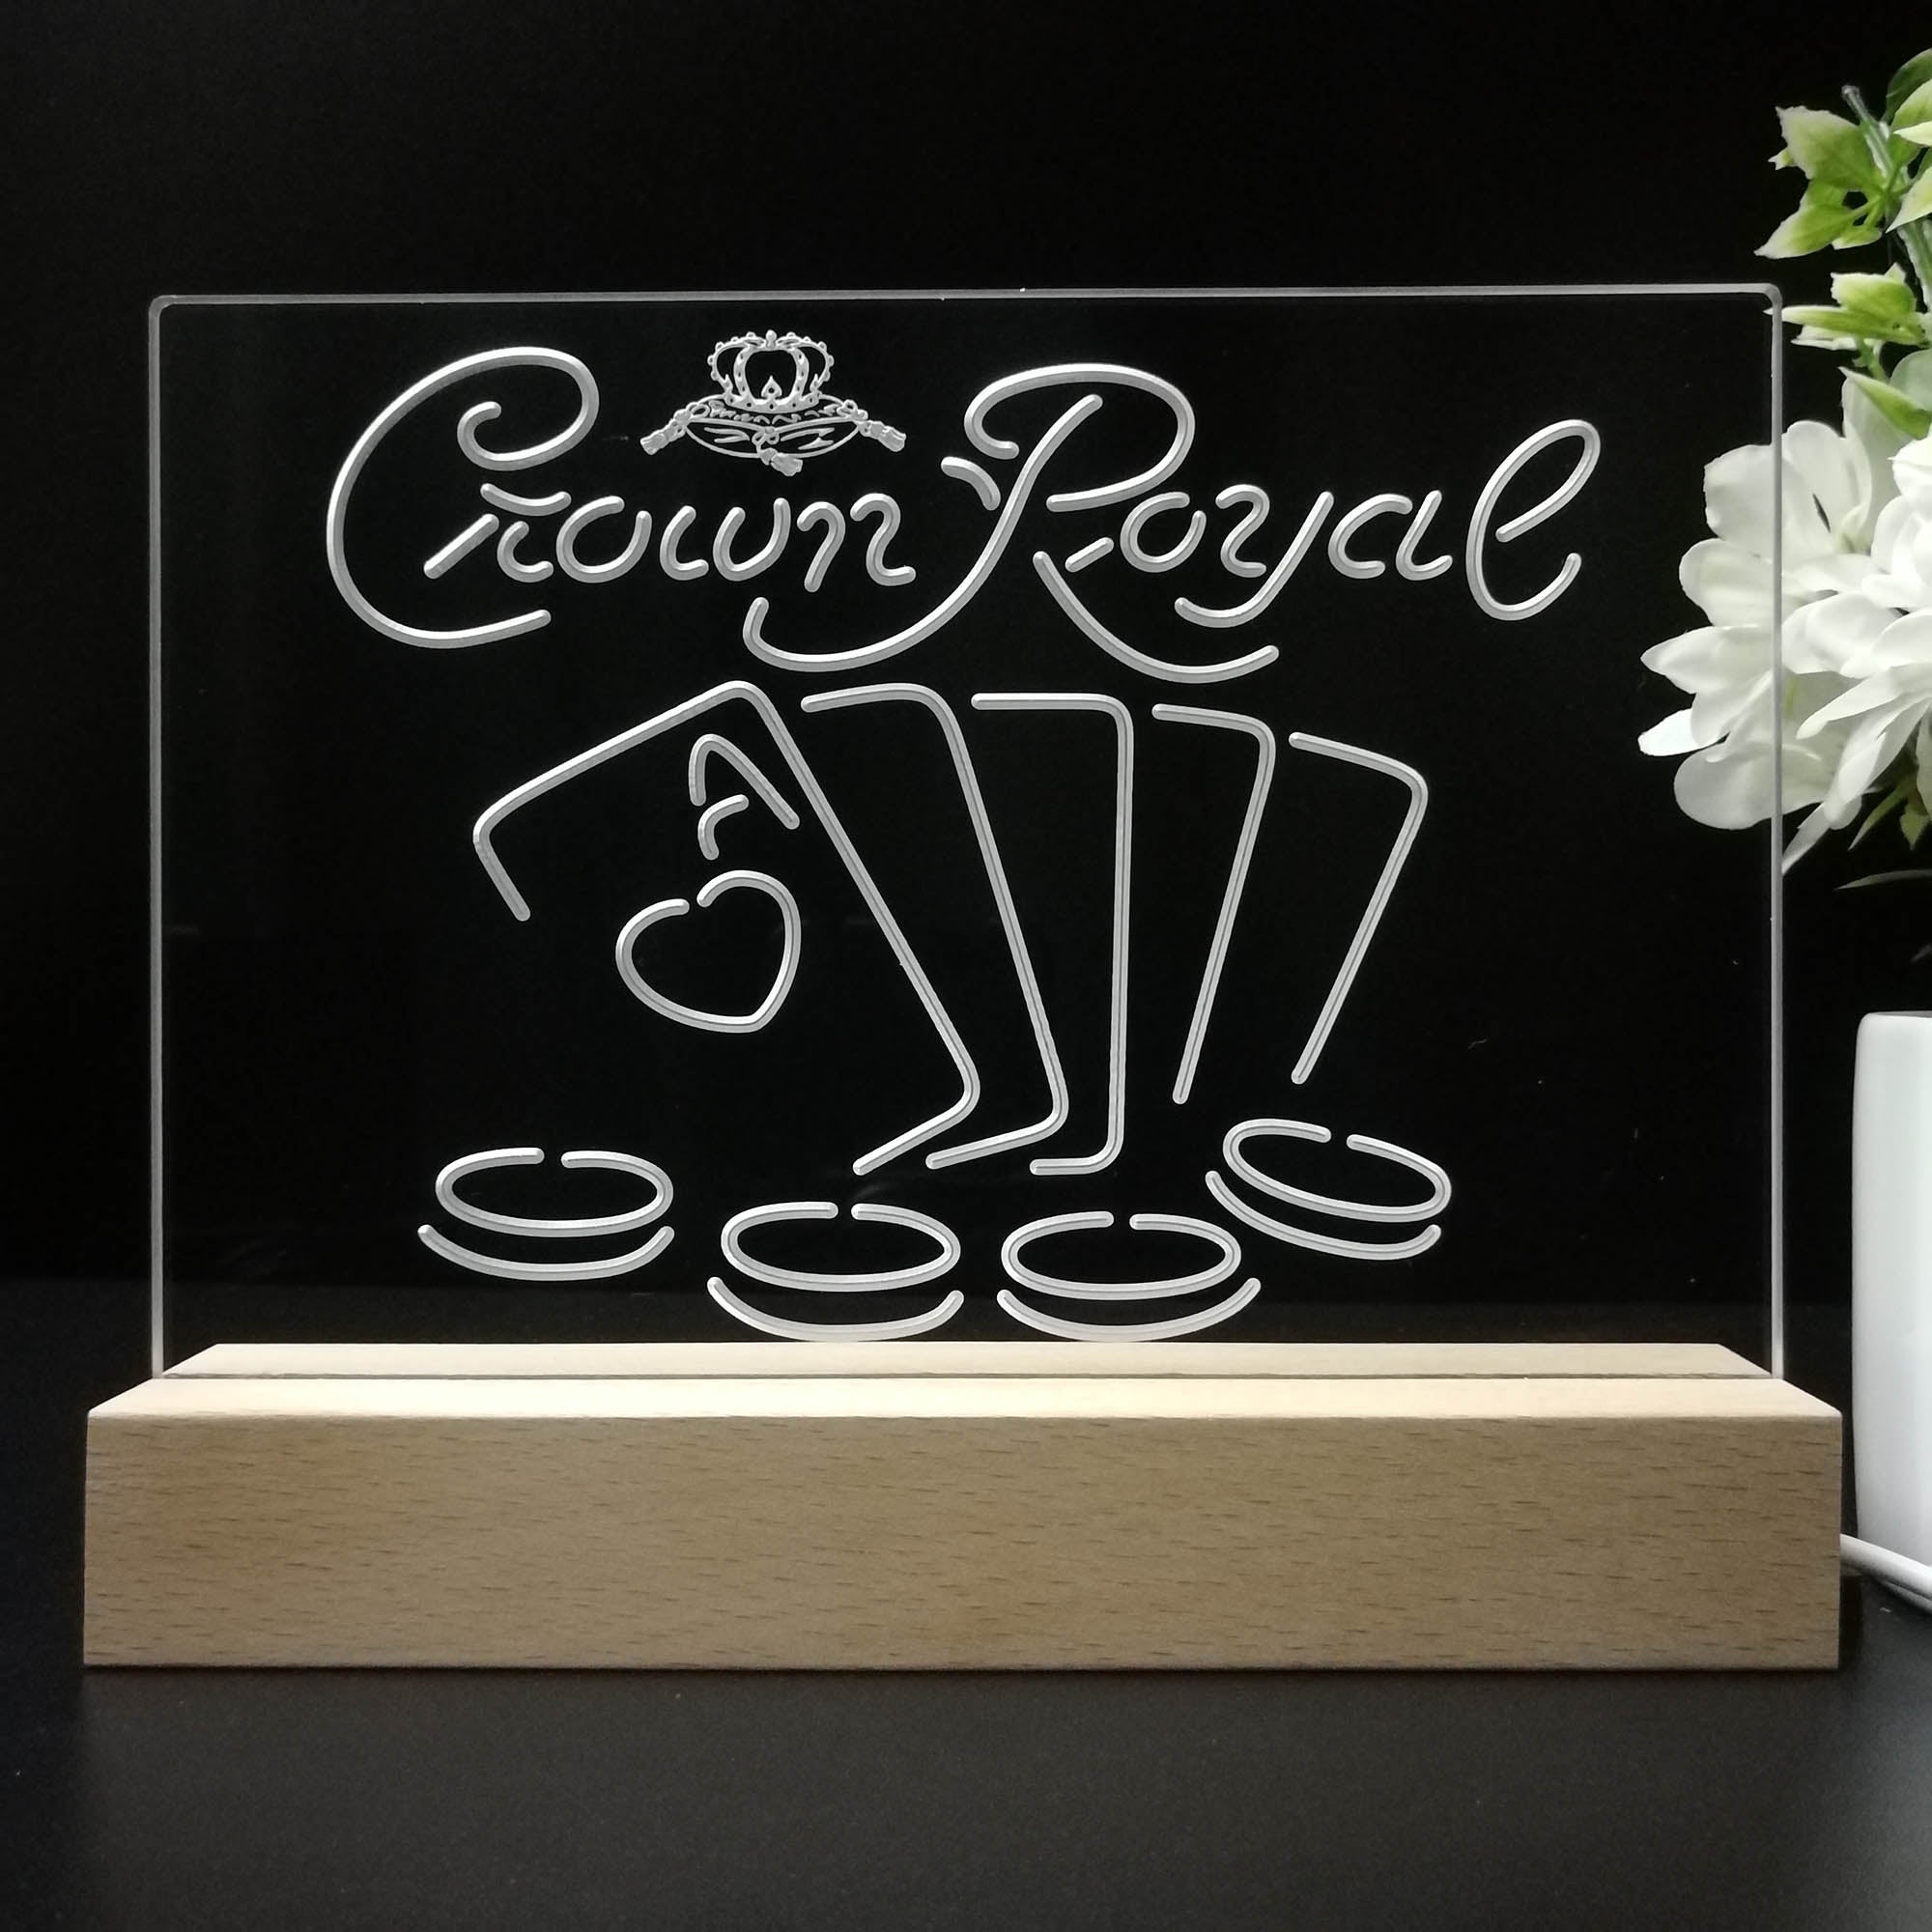 Crown Royal Casino Poker Night Light 3D Illusion Lamp Home Bar Decor